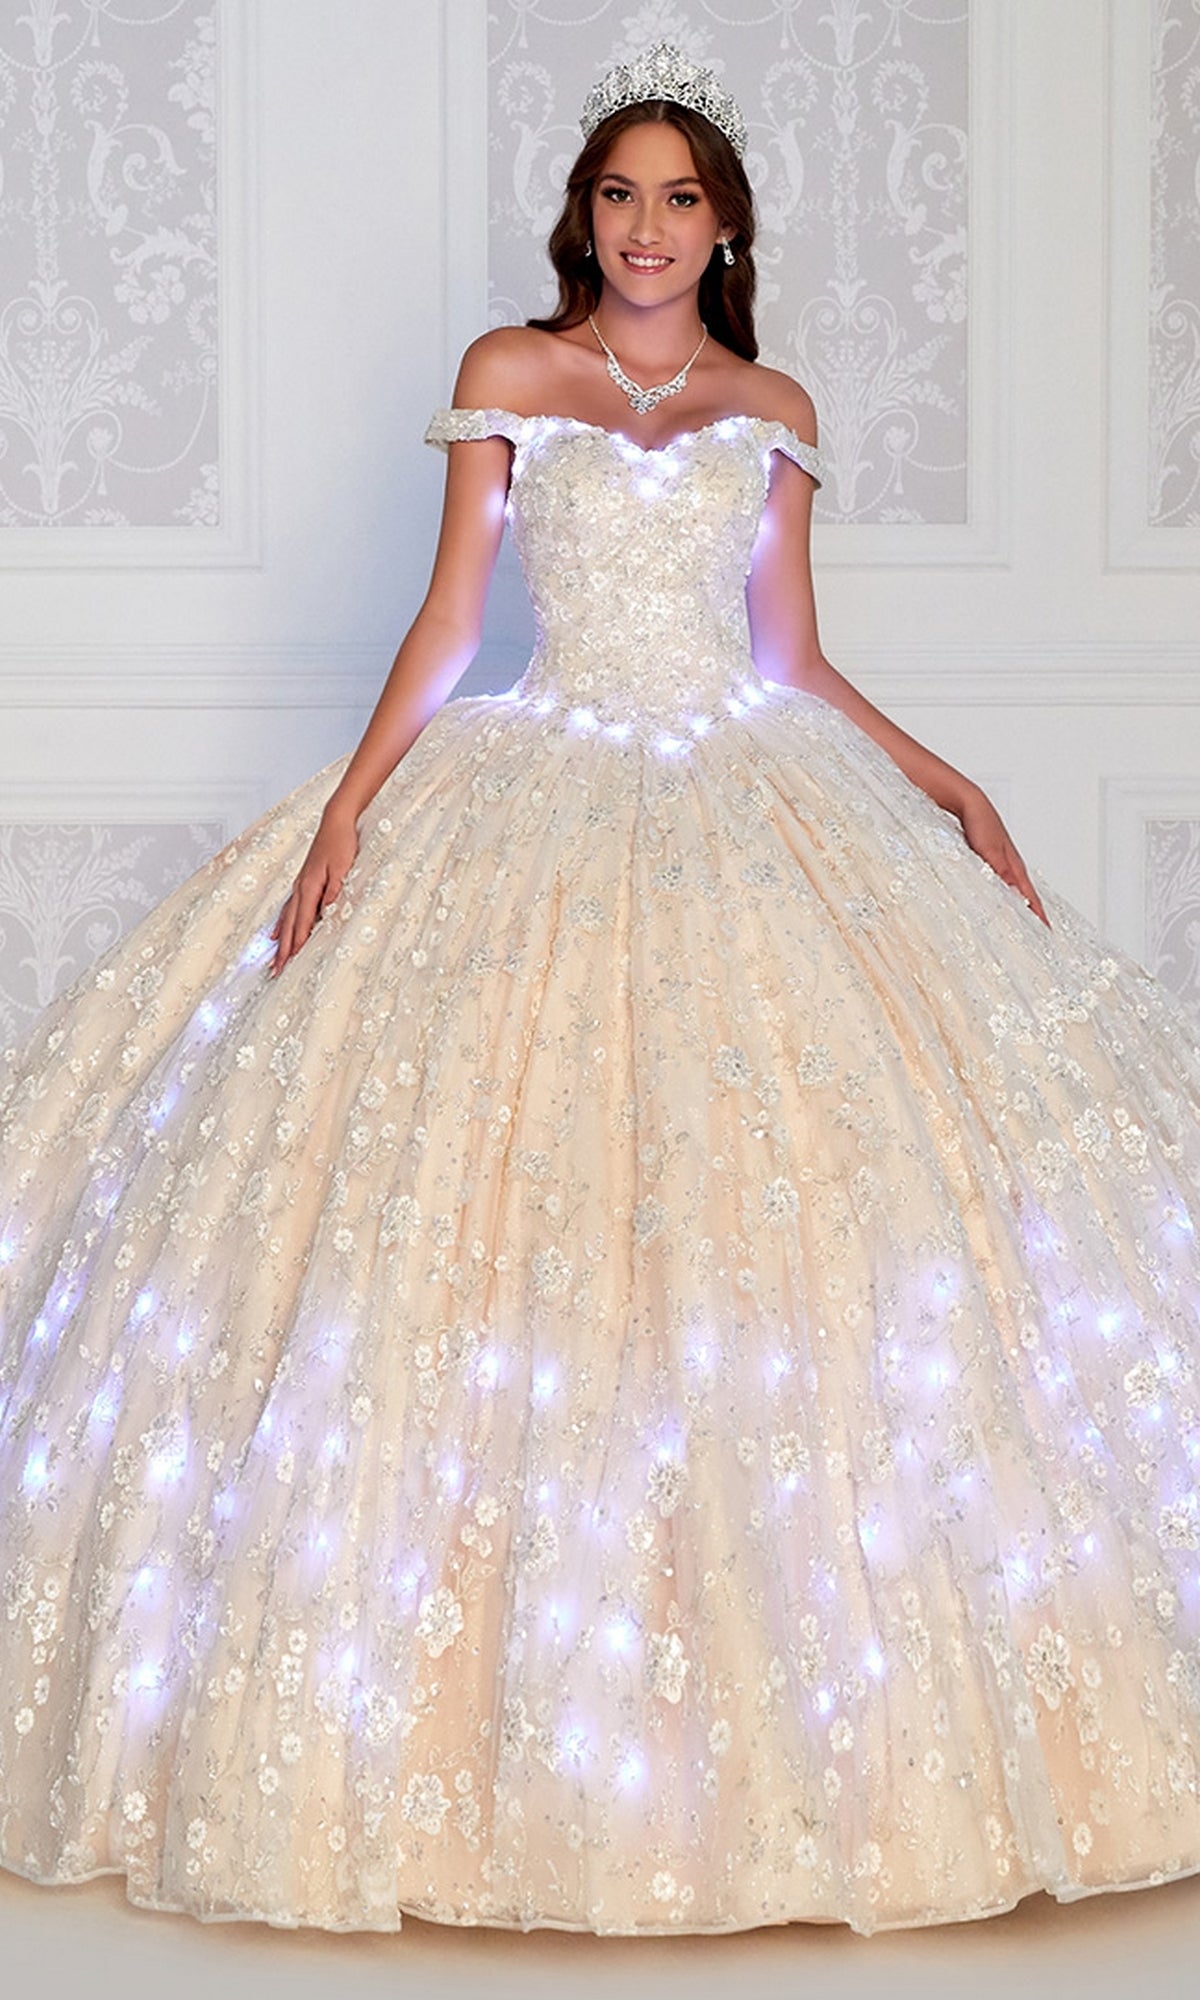 Princesa Glow-in-the-Dark Quince Dress PR12266